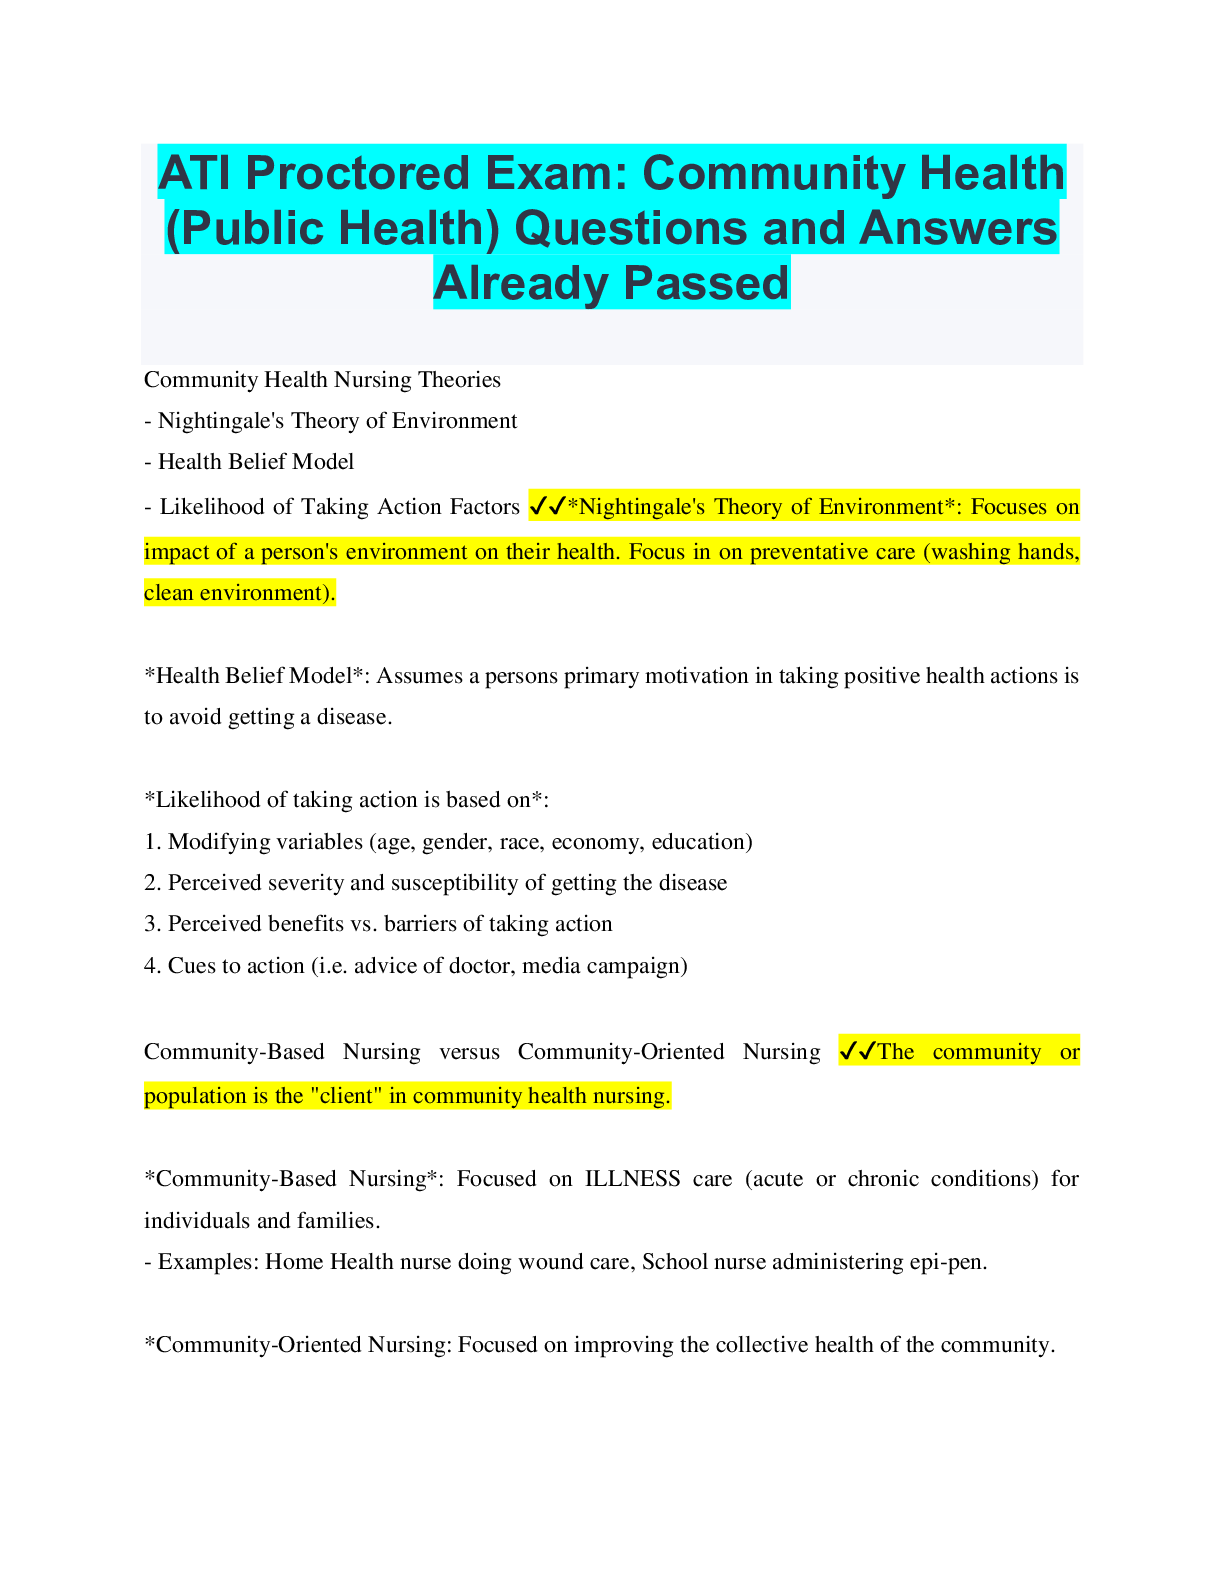 ATI Proctored Exam Community Health (Public Health) Questions and